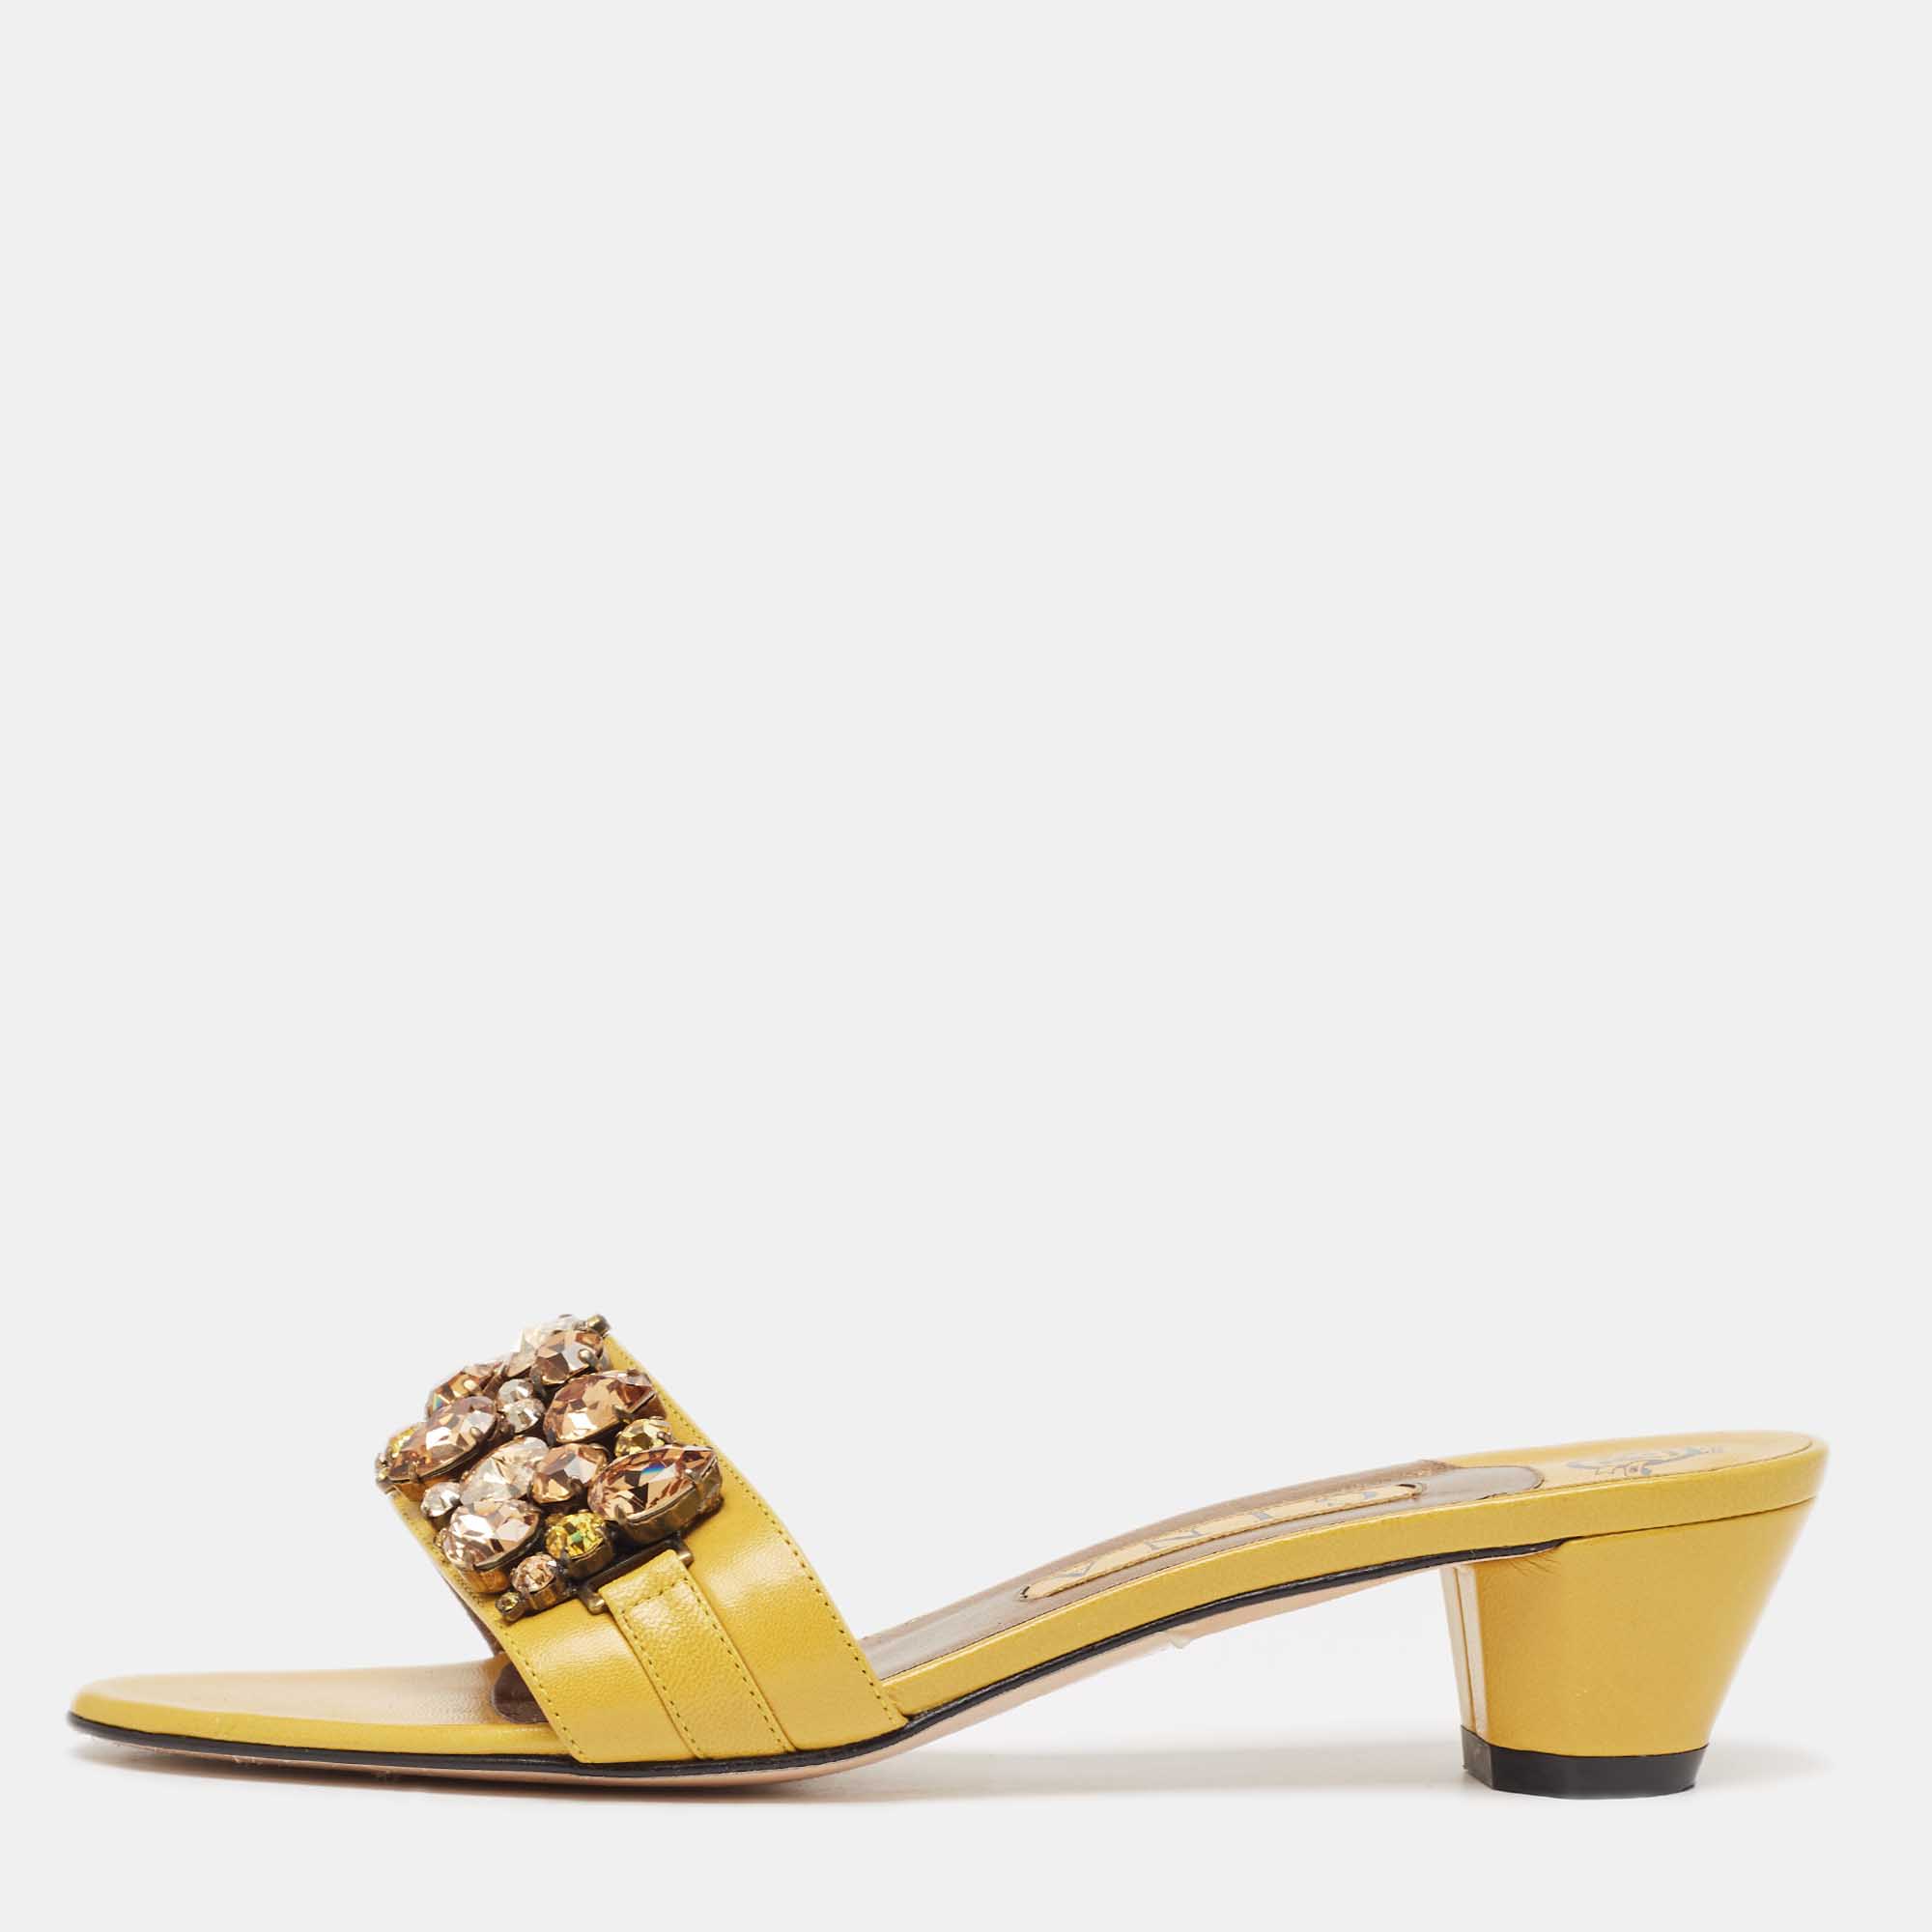 Gina yellow leather crystal embellished slide sandals size 39